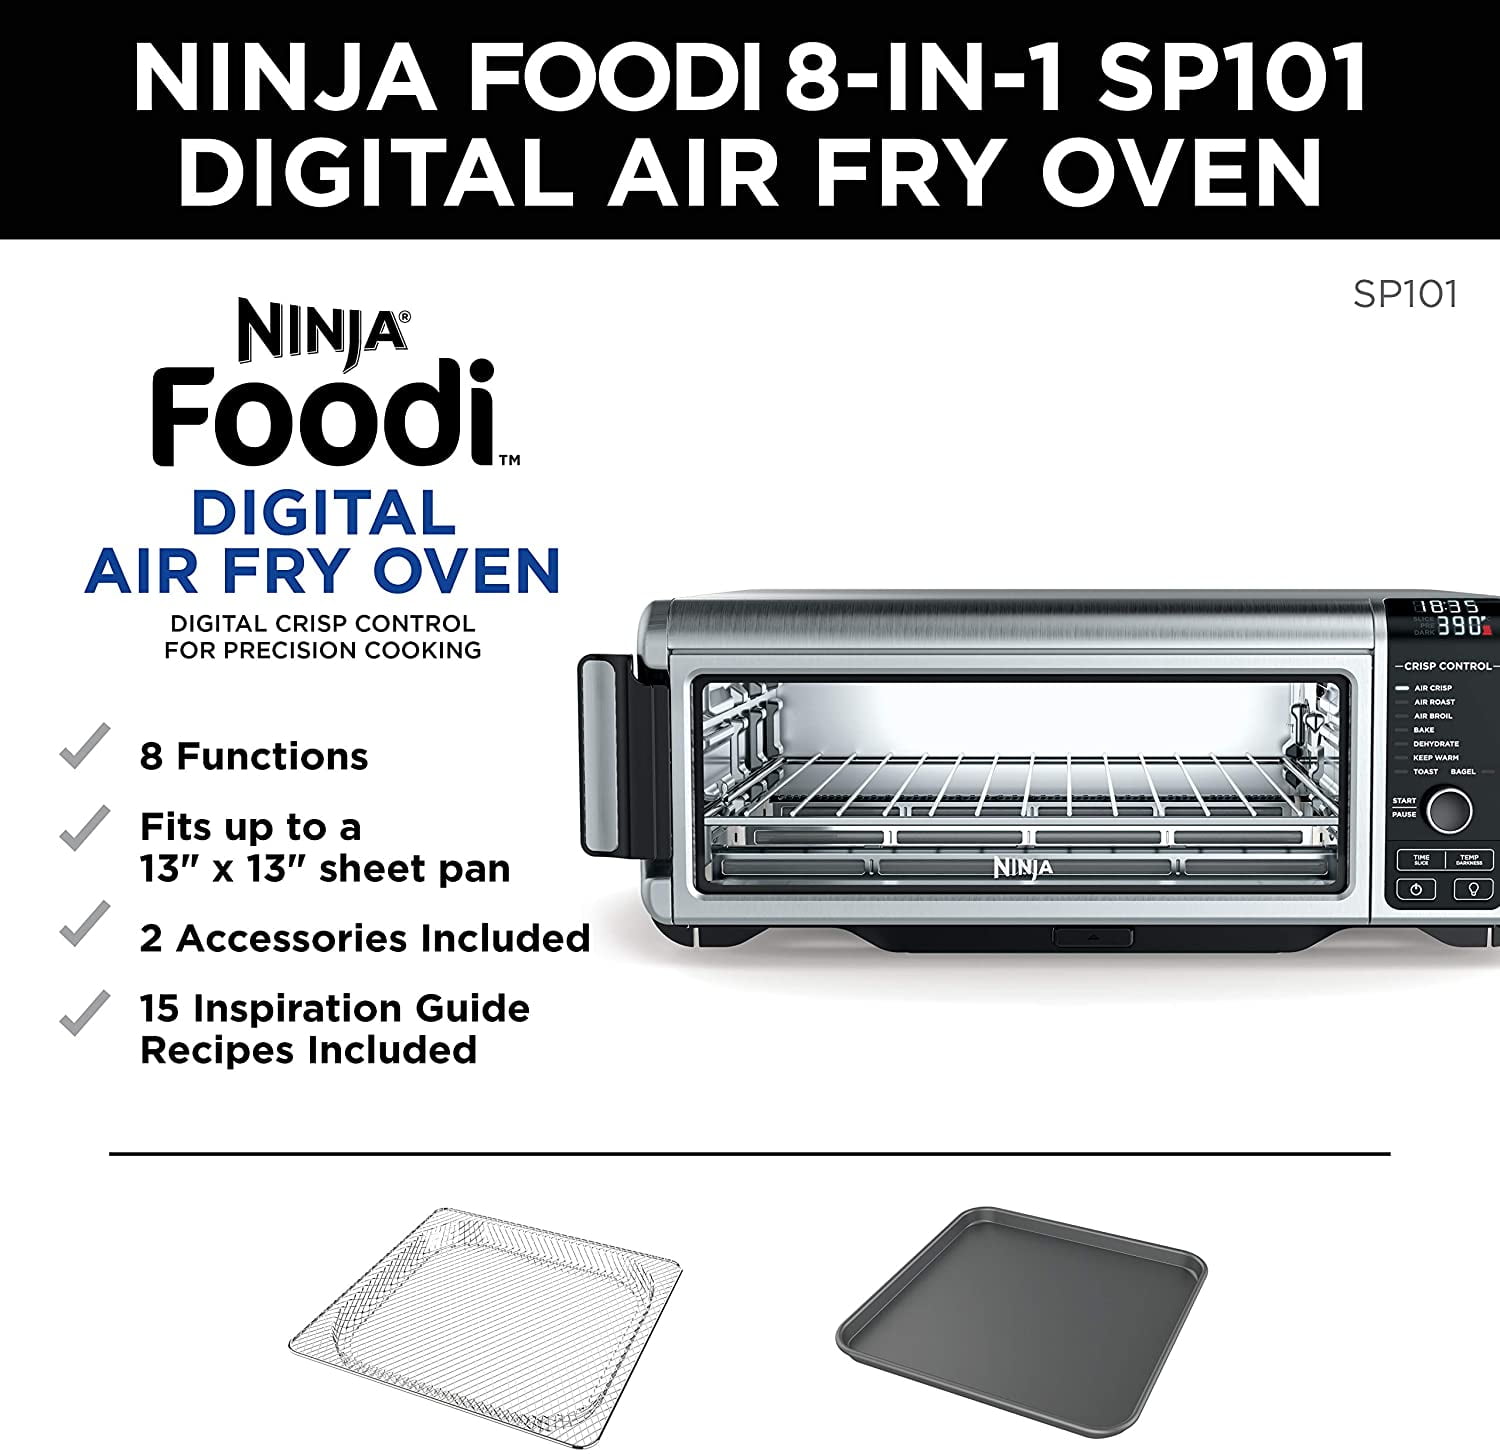 Up To 25% Off on Ninja SP101 Foodi 8-in-1 Digi